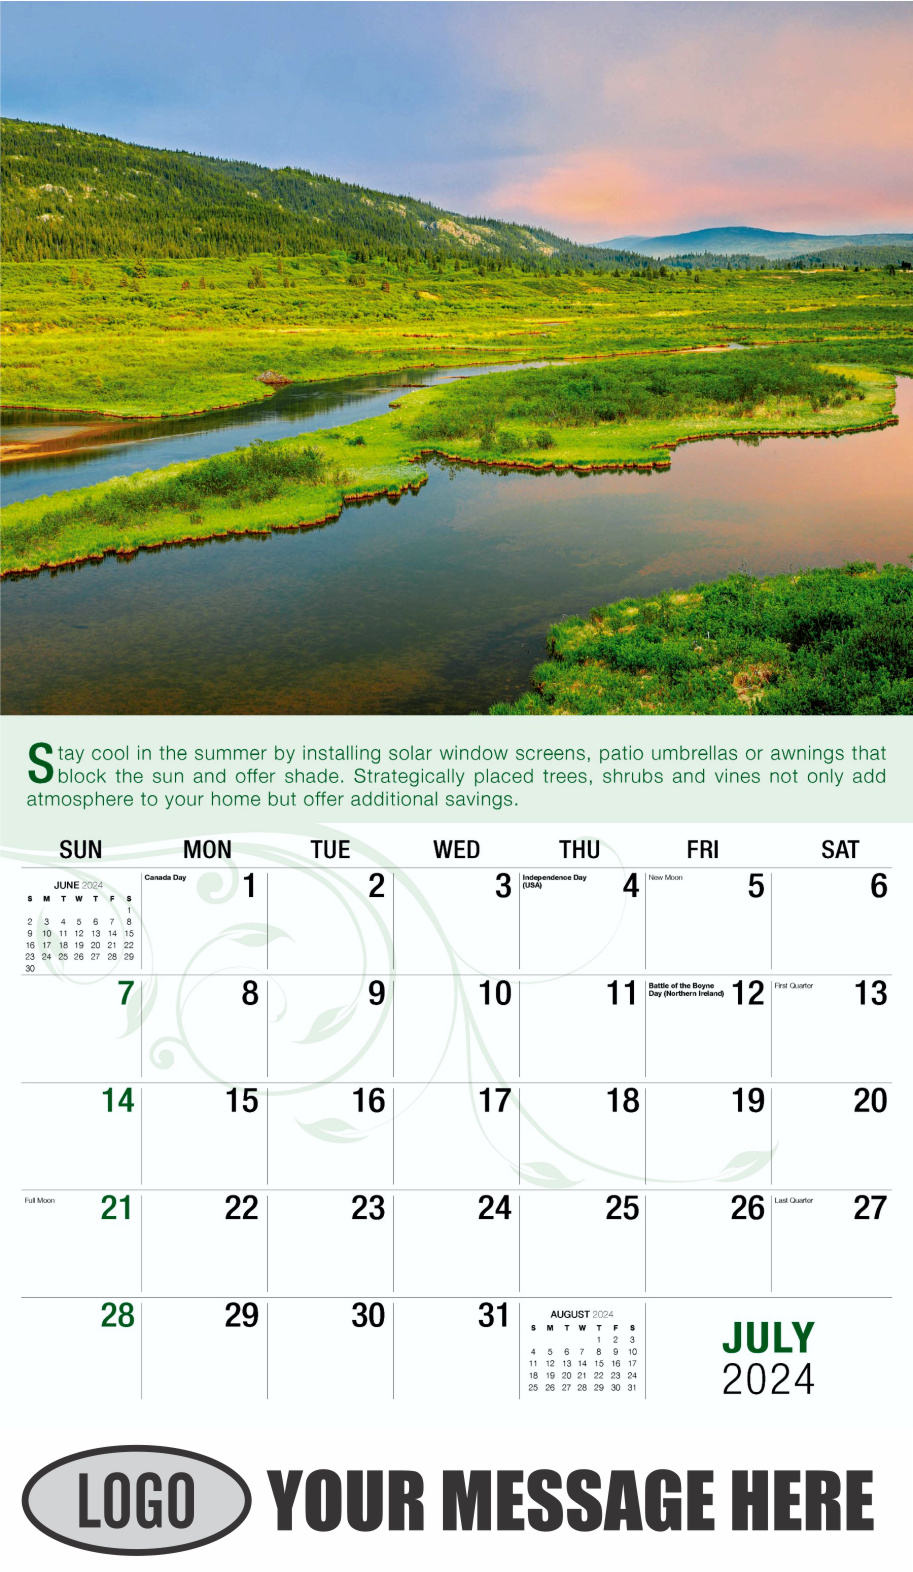 Go Green 2024 Business Promotion Calendar - July